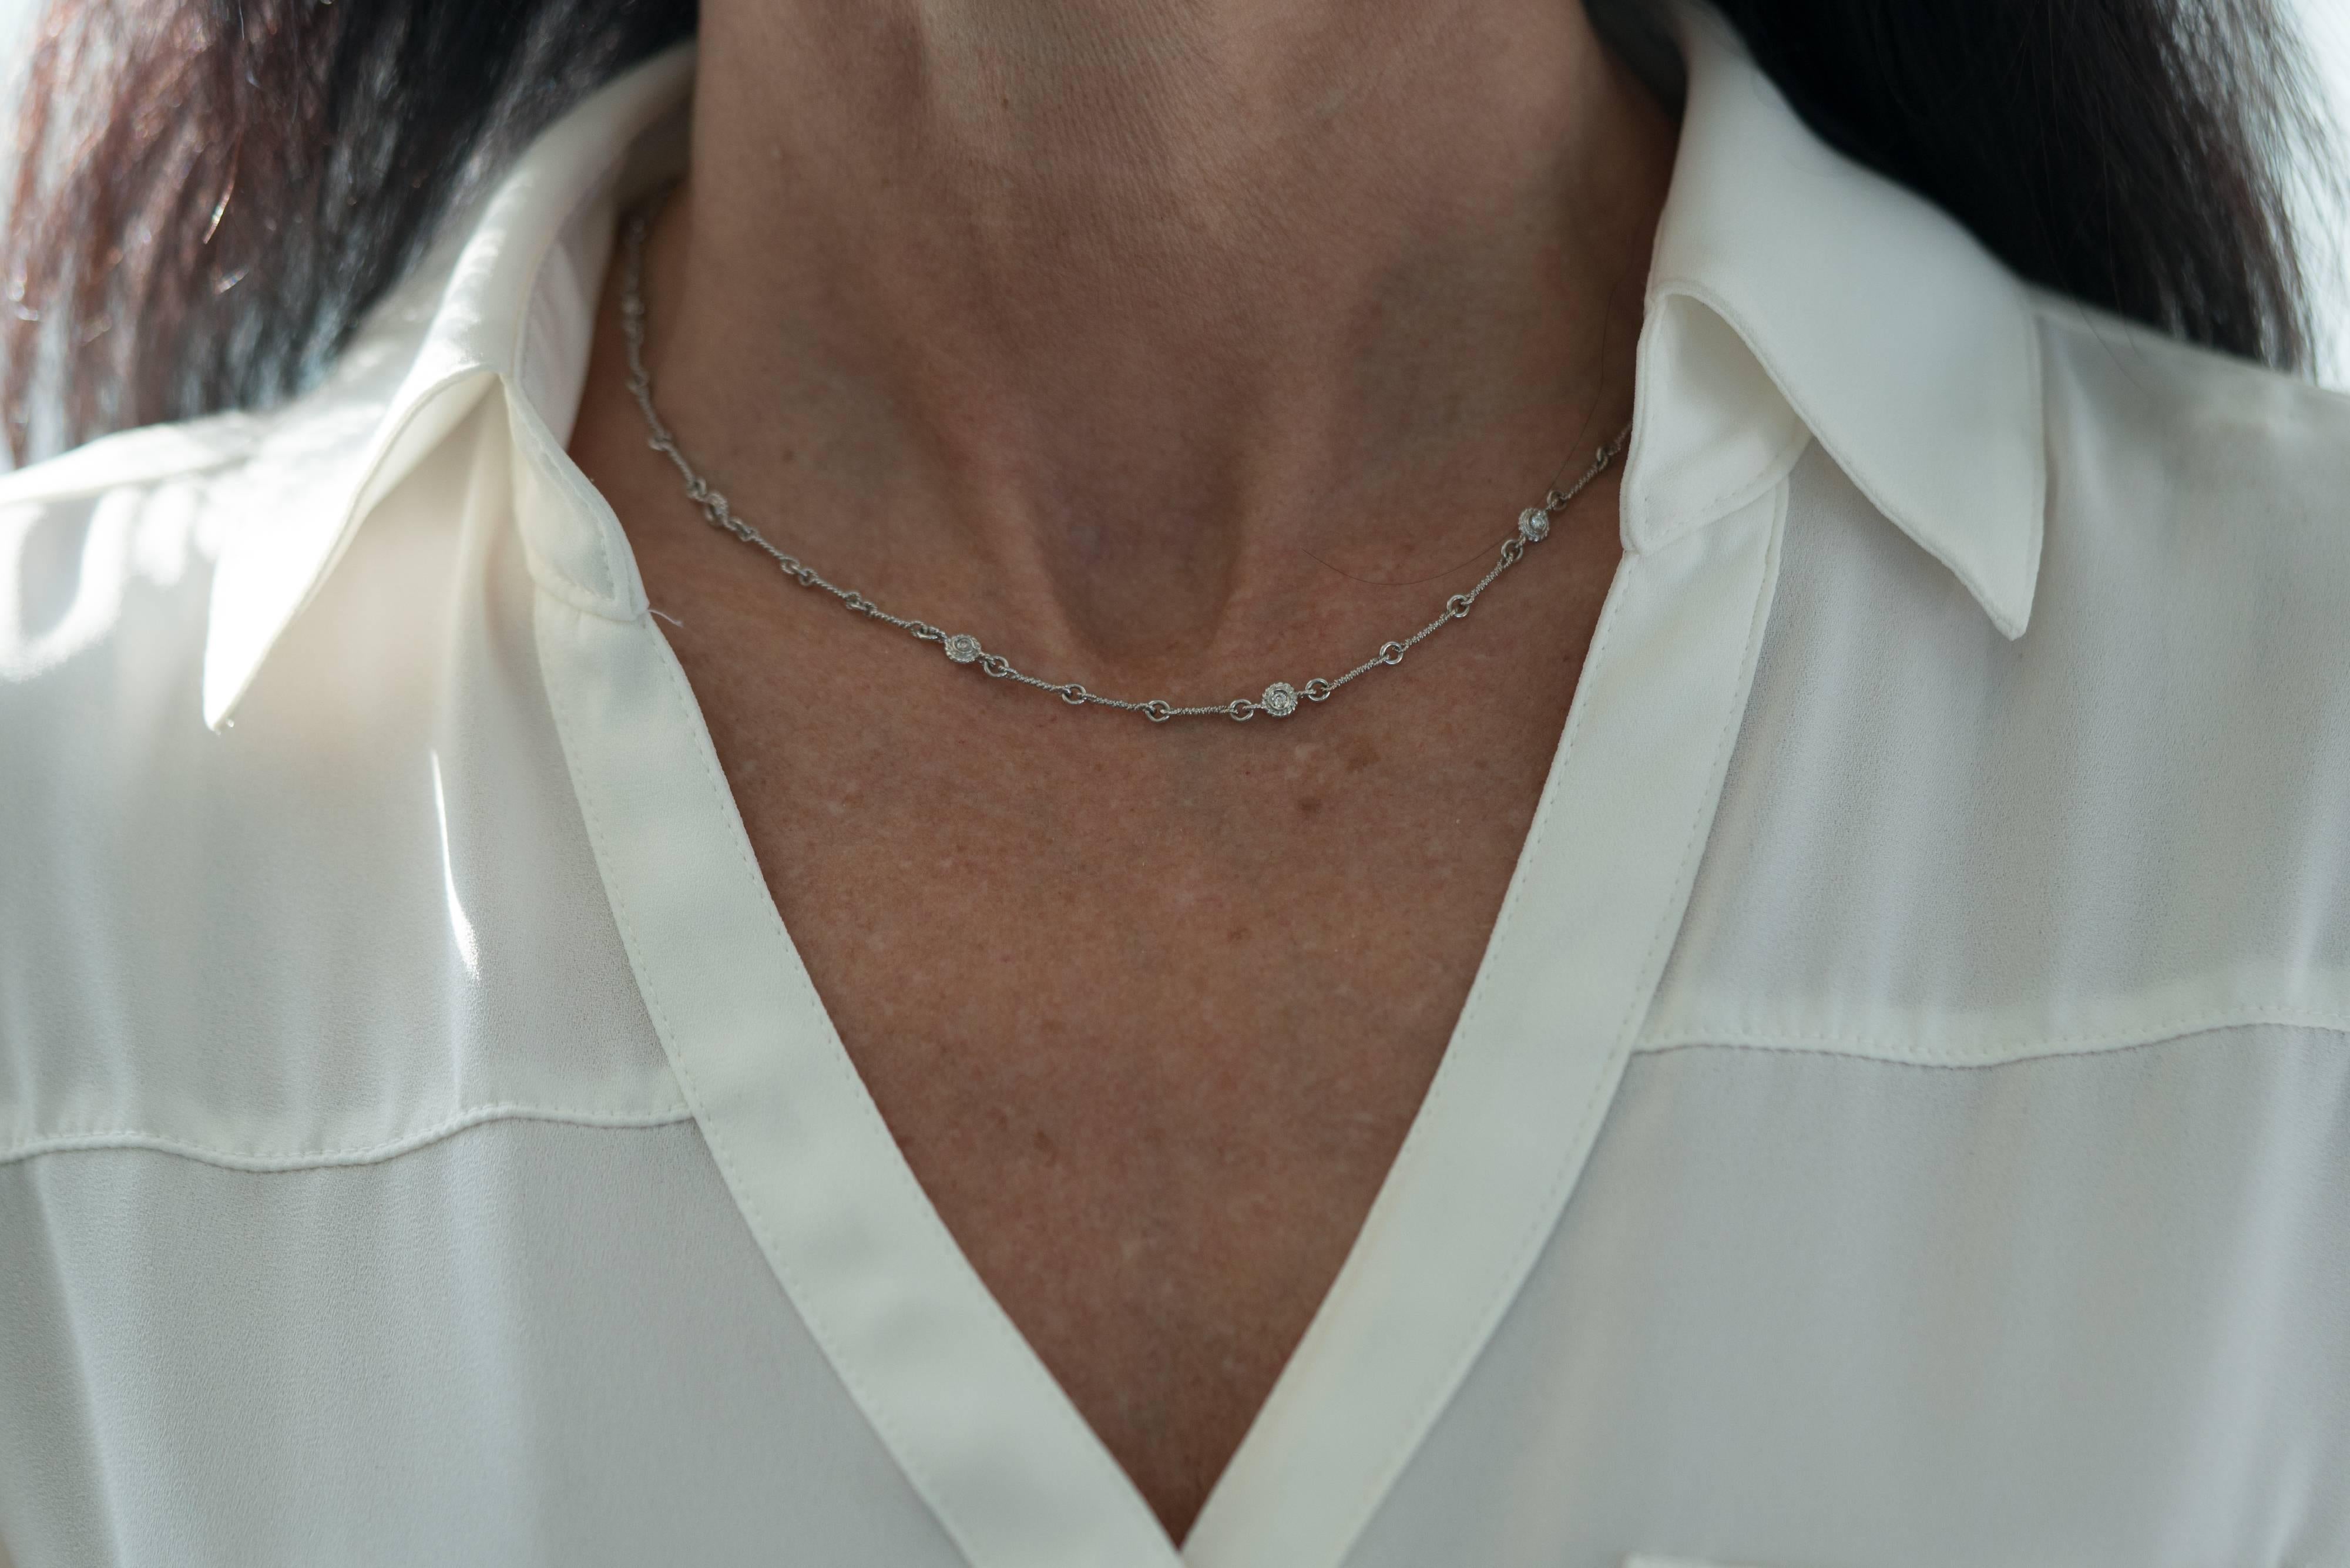 16 inch necklaces